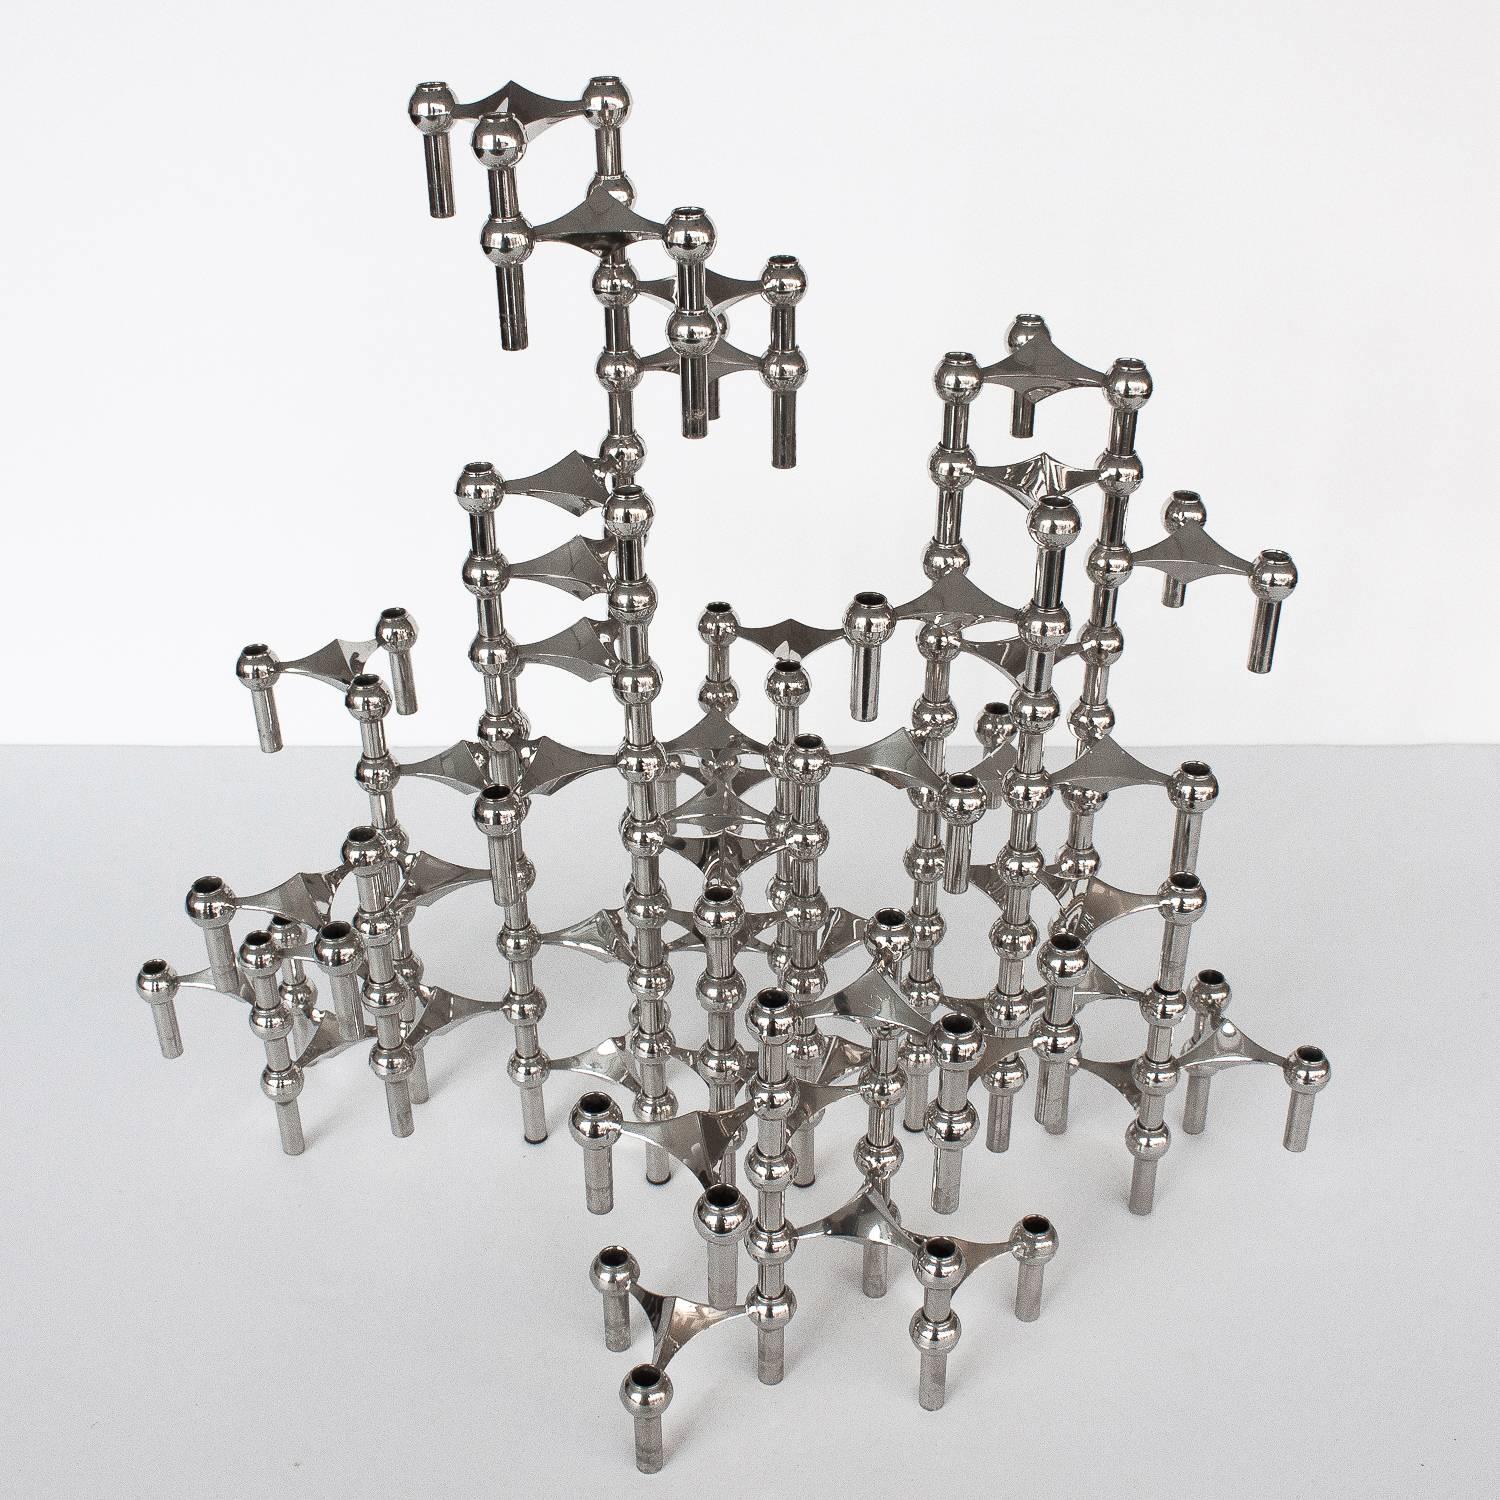 German Set of 56 Piece Modular Candlestick Sculpture by Fritz Nagel and Caesar Stoffi